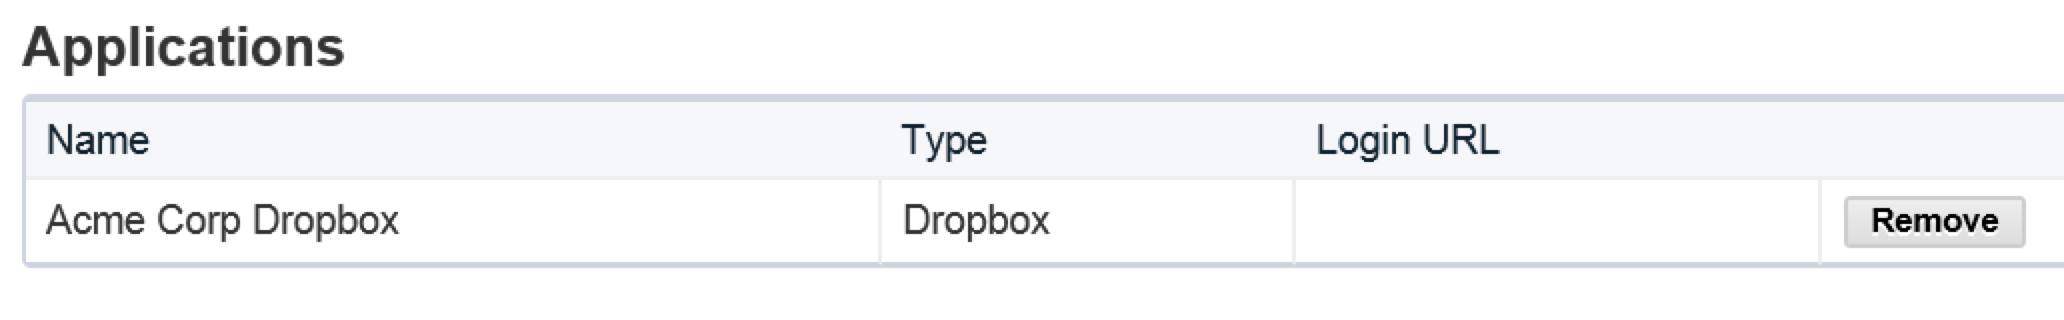 Dropbox Application Added